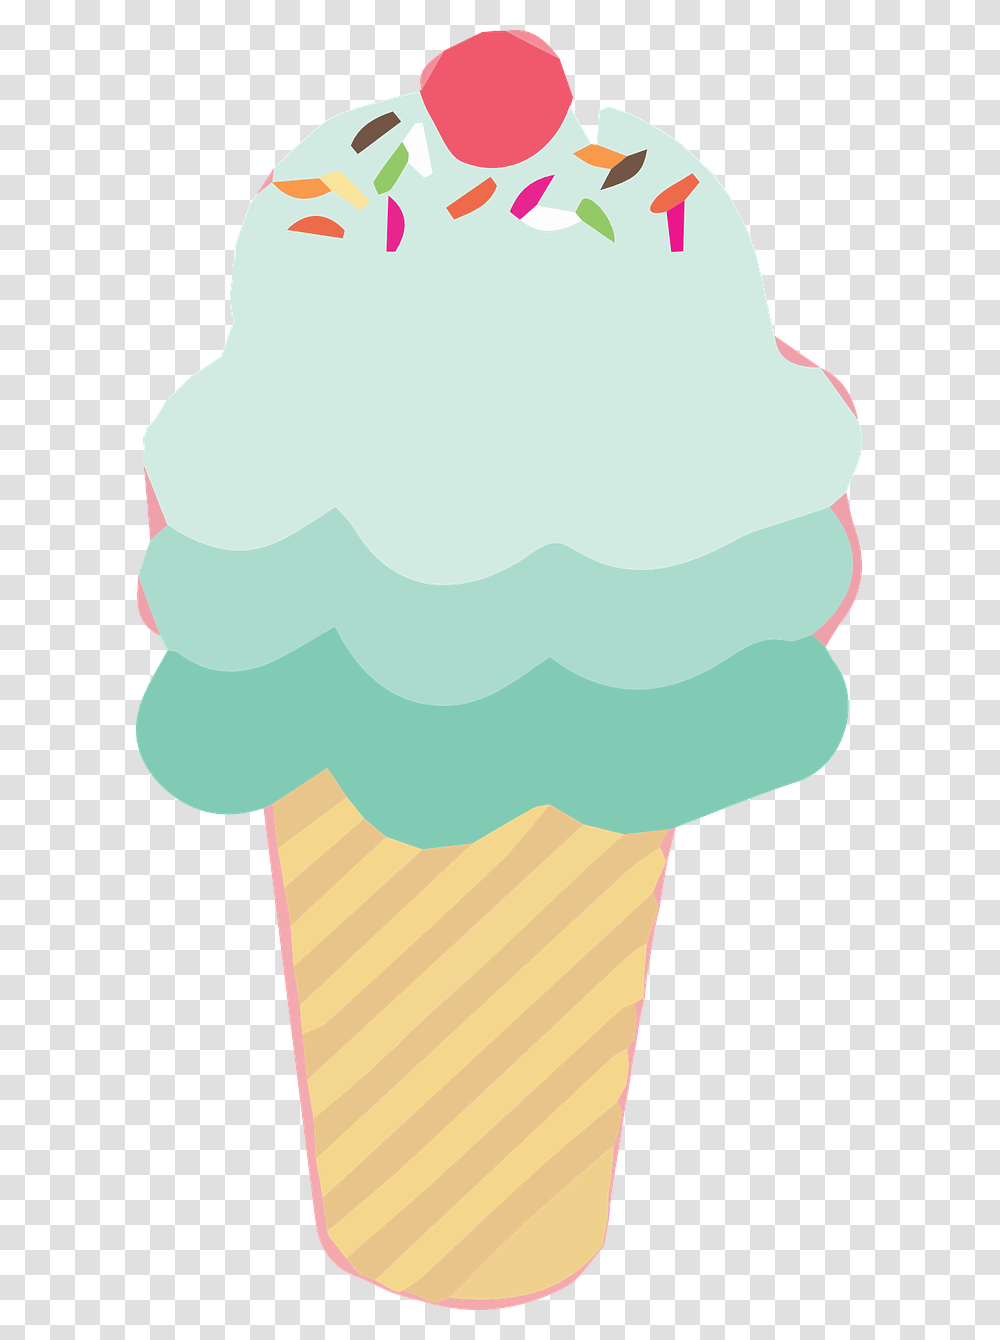 Ice Cream Cones Clipart Commercial Use Ice Cream Cone Clipart, Dessert, Food, Creme, Baseball Cap Transparent Png